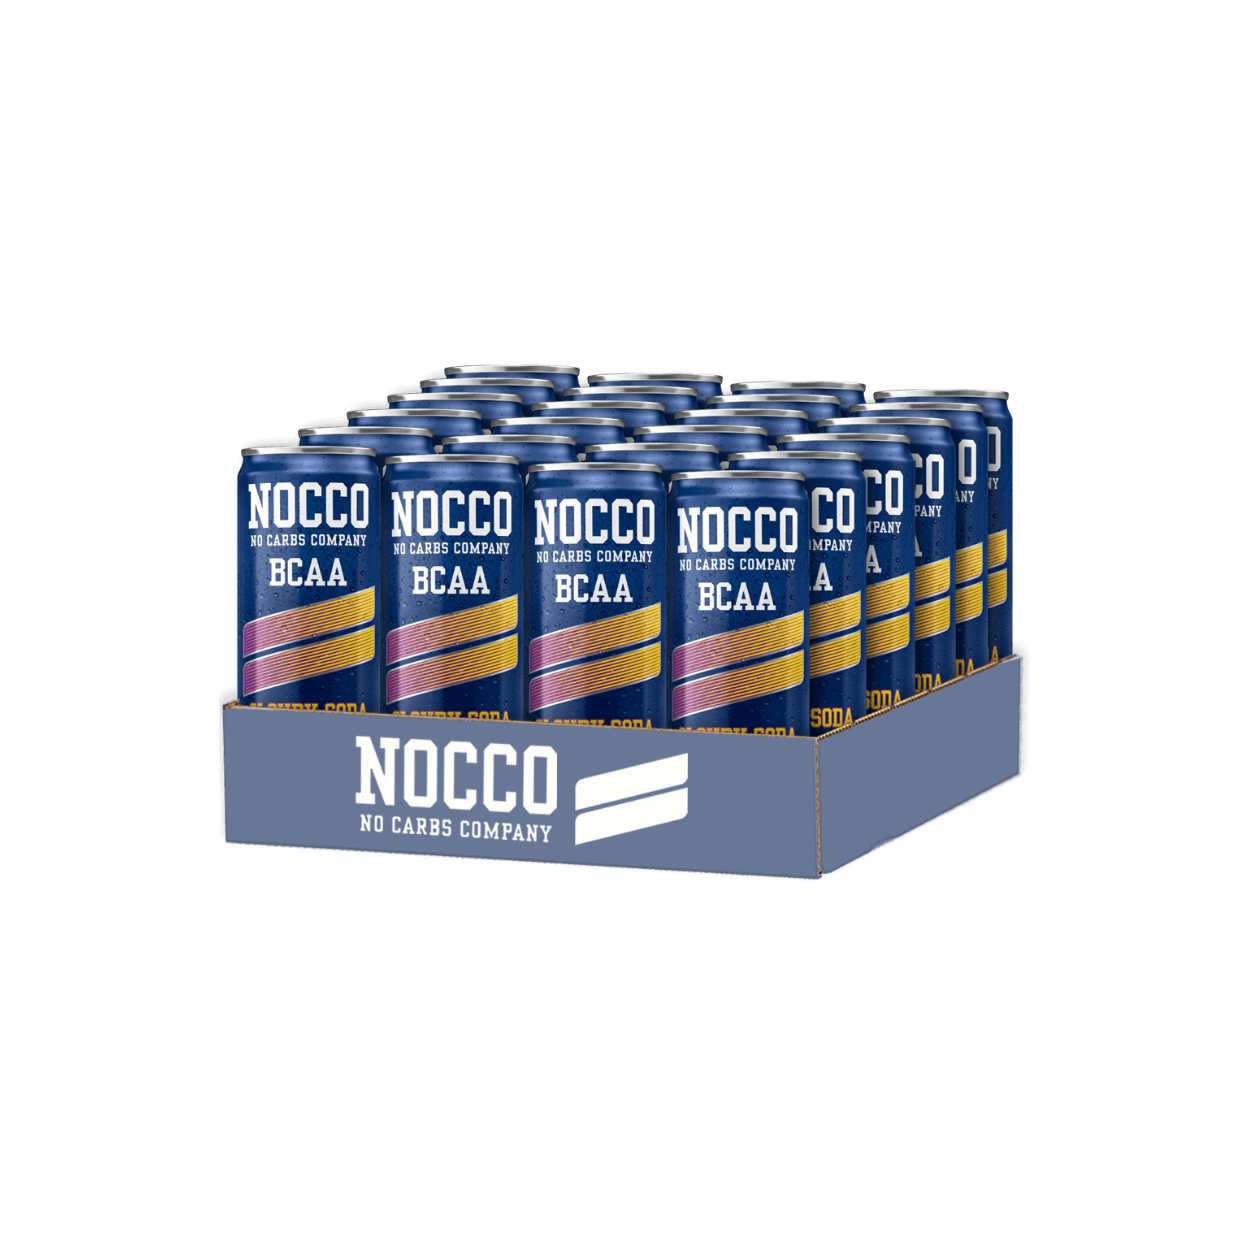 Nocco Cloudy Soda Dose (1-24x330ml)